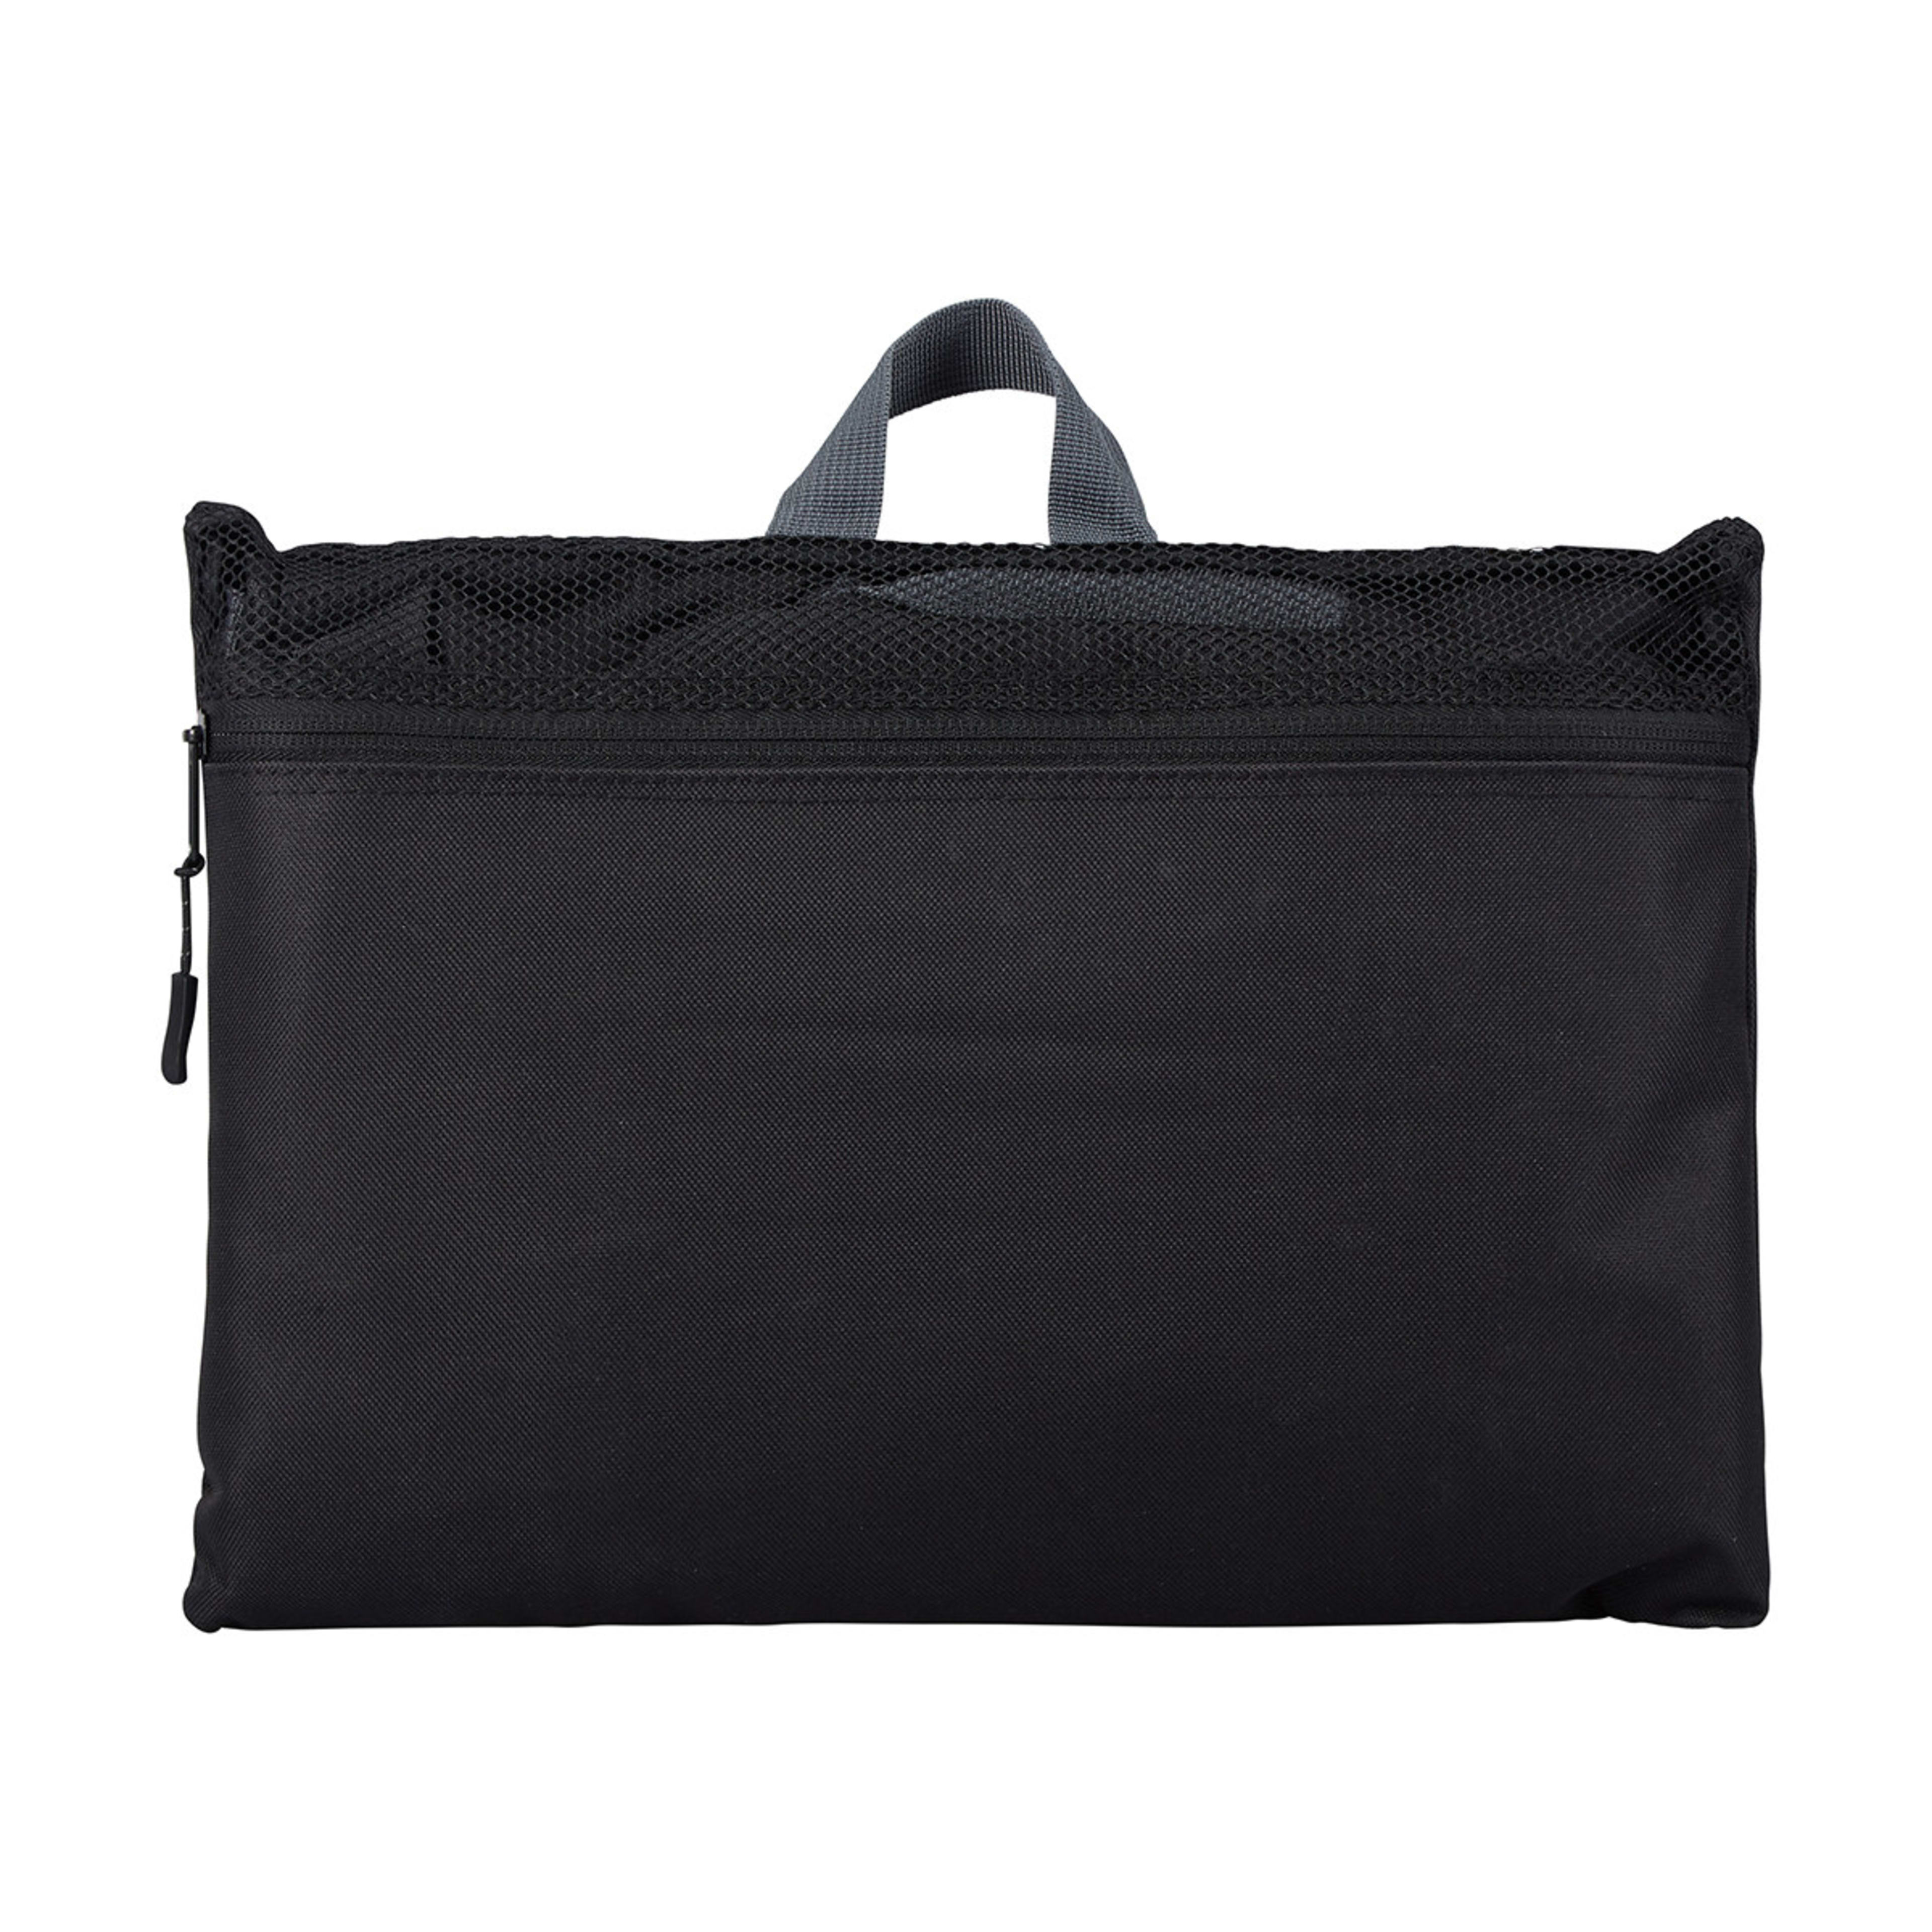 71L Easy Store Duffle Bag - Black - Kmart